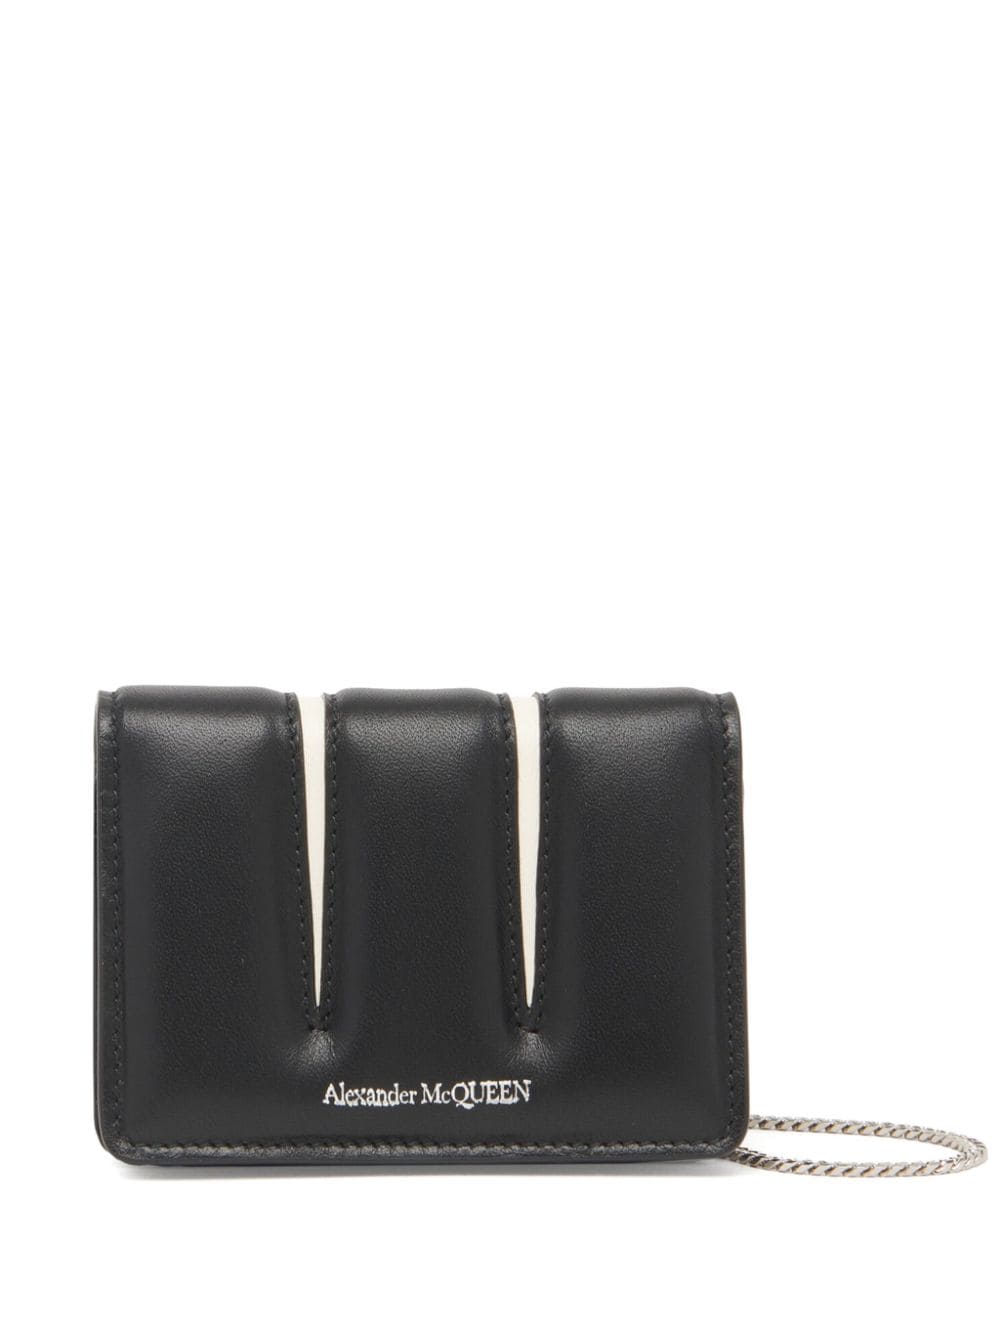 Image 1 of Alexander McQueen The Slash leather cardholder